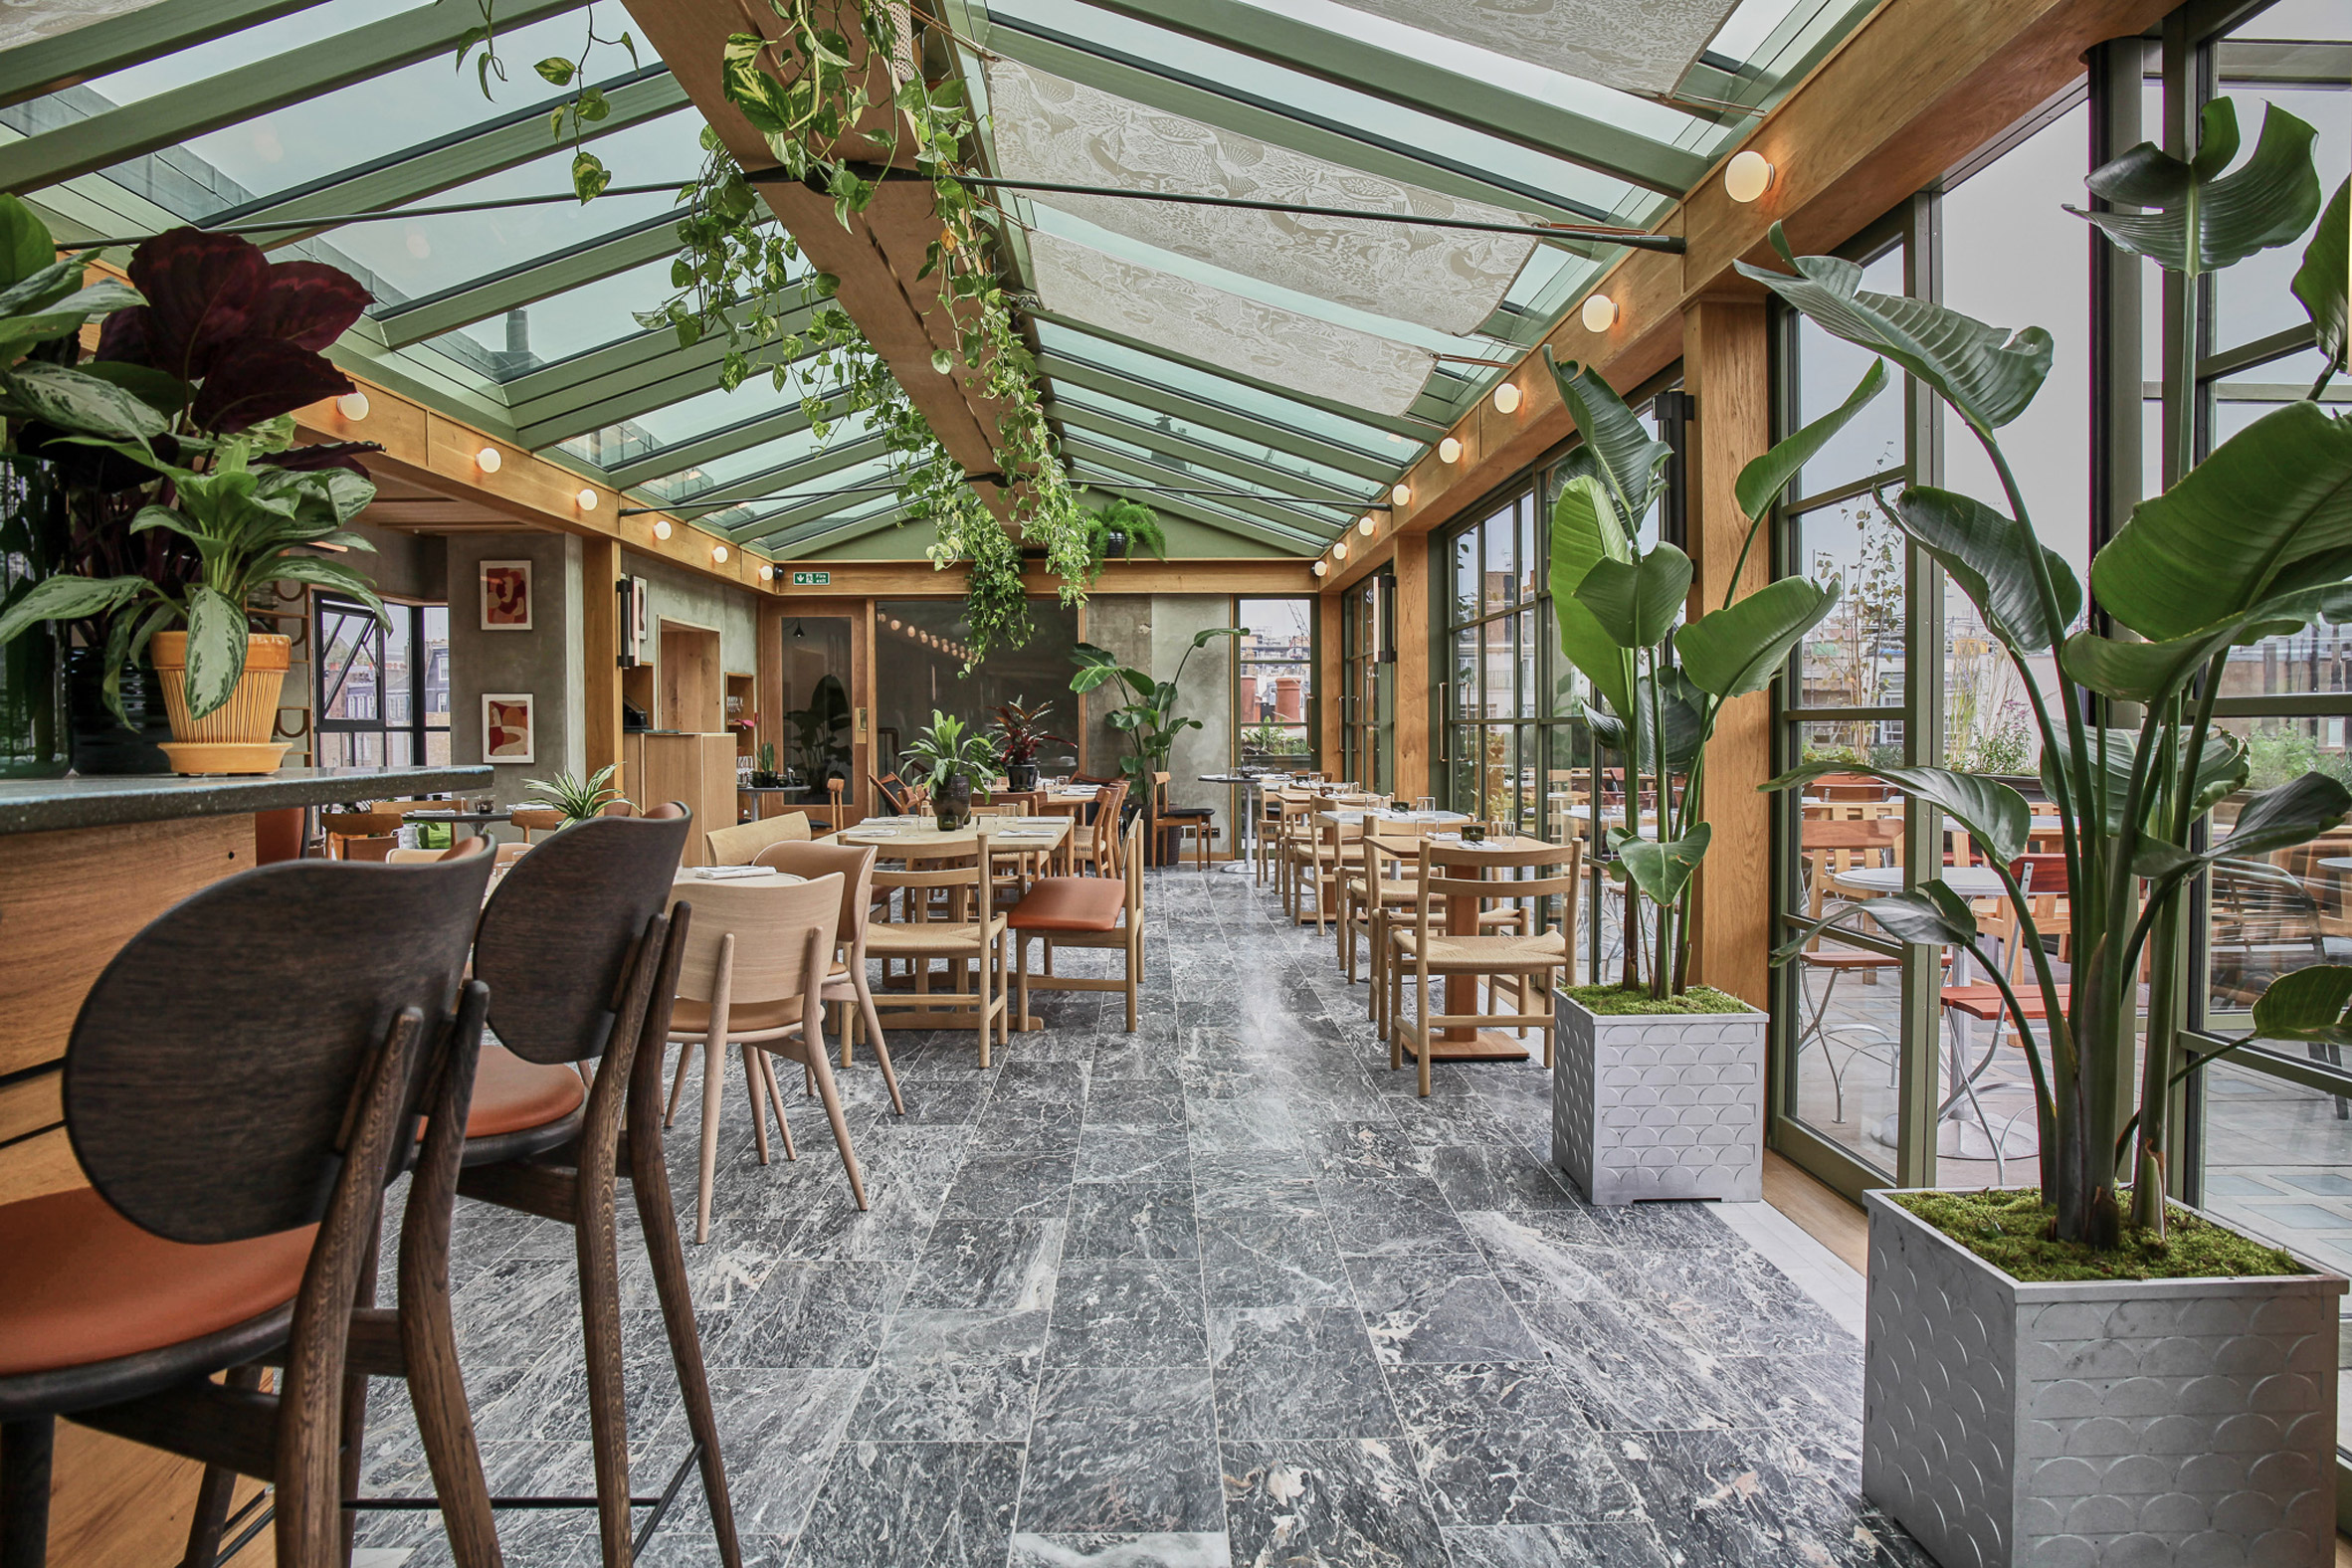 Interiors of Roof Garden restaurant inside Pantechnicon in London